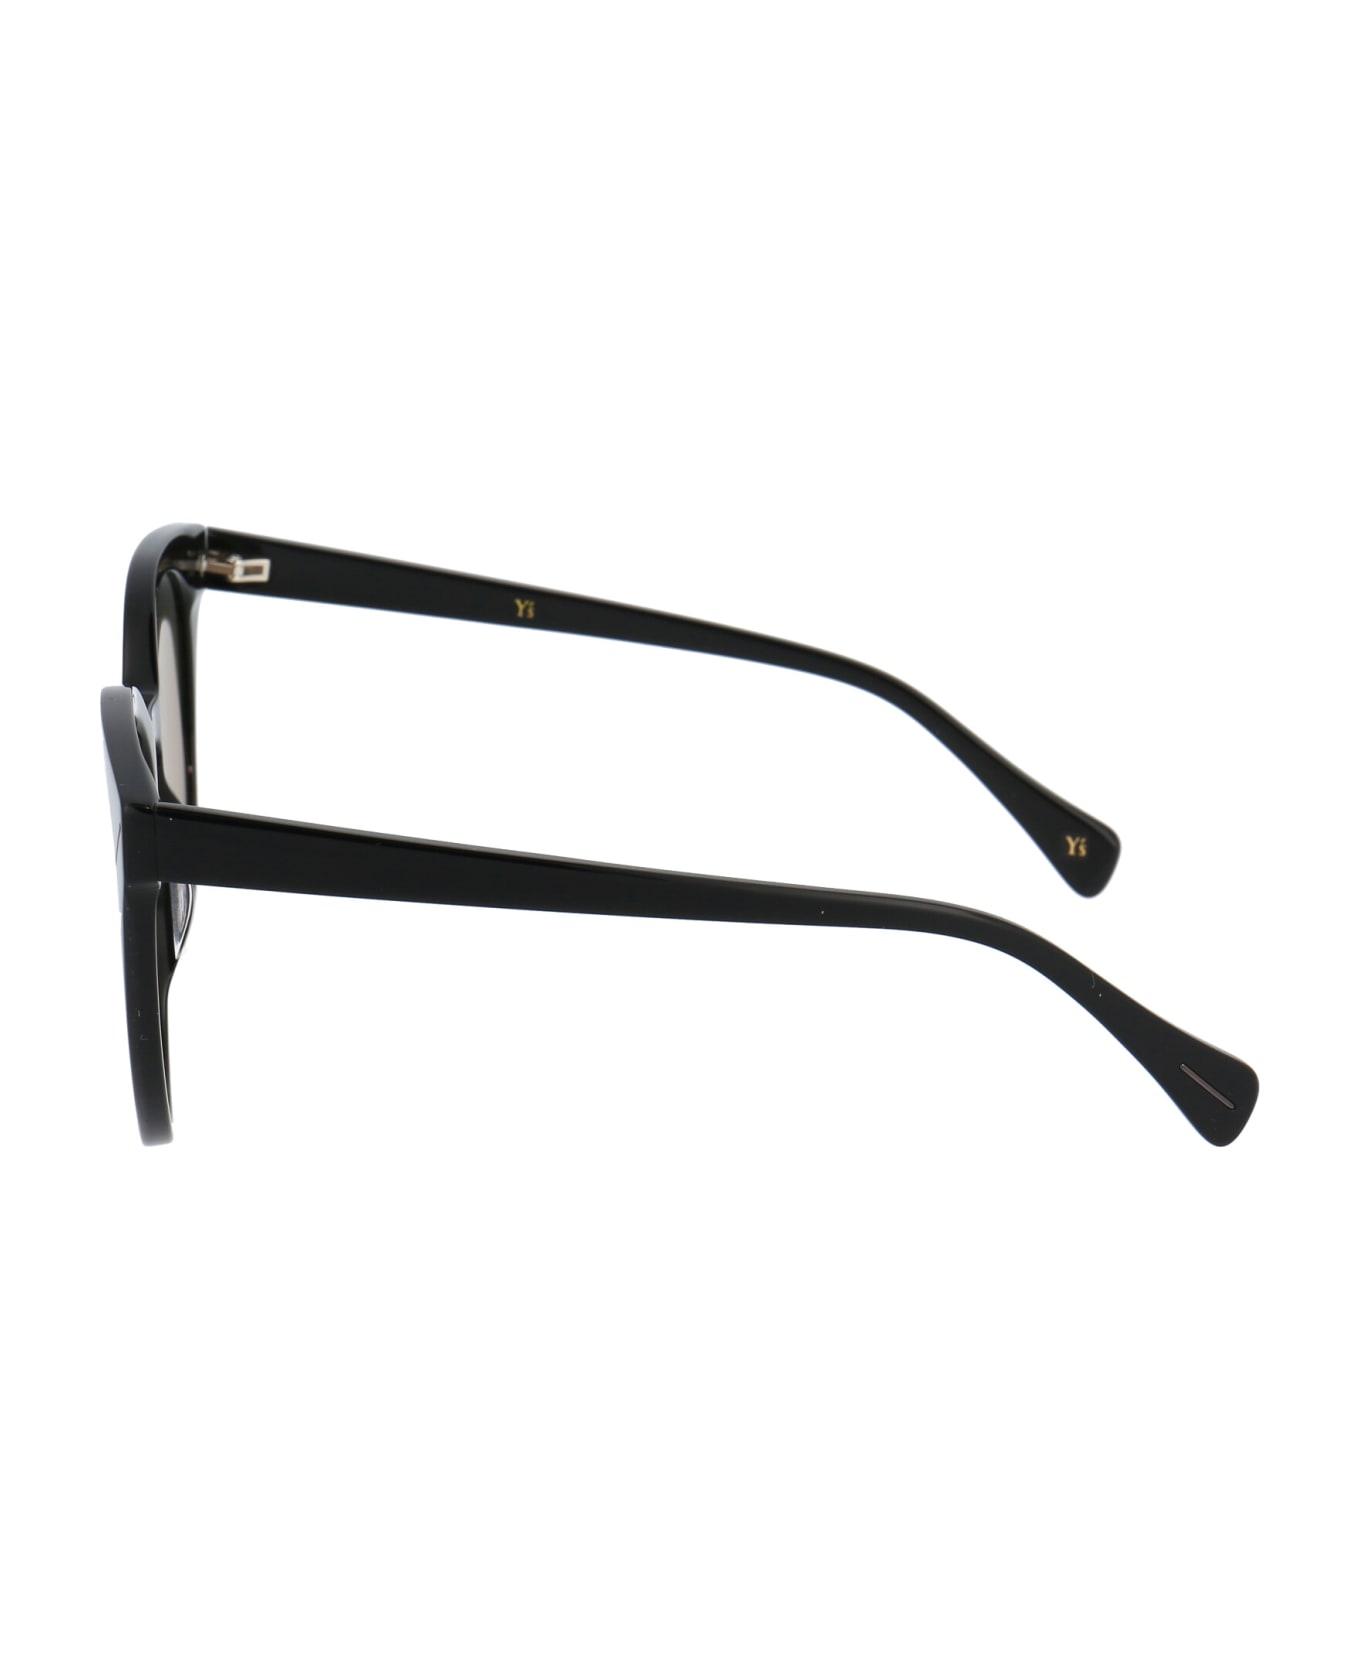 Yohji Yamamoto Ys5003 Sunglasses - 001 BLACK